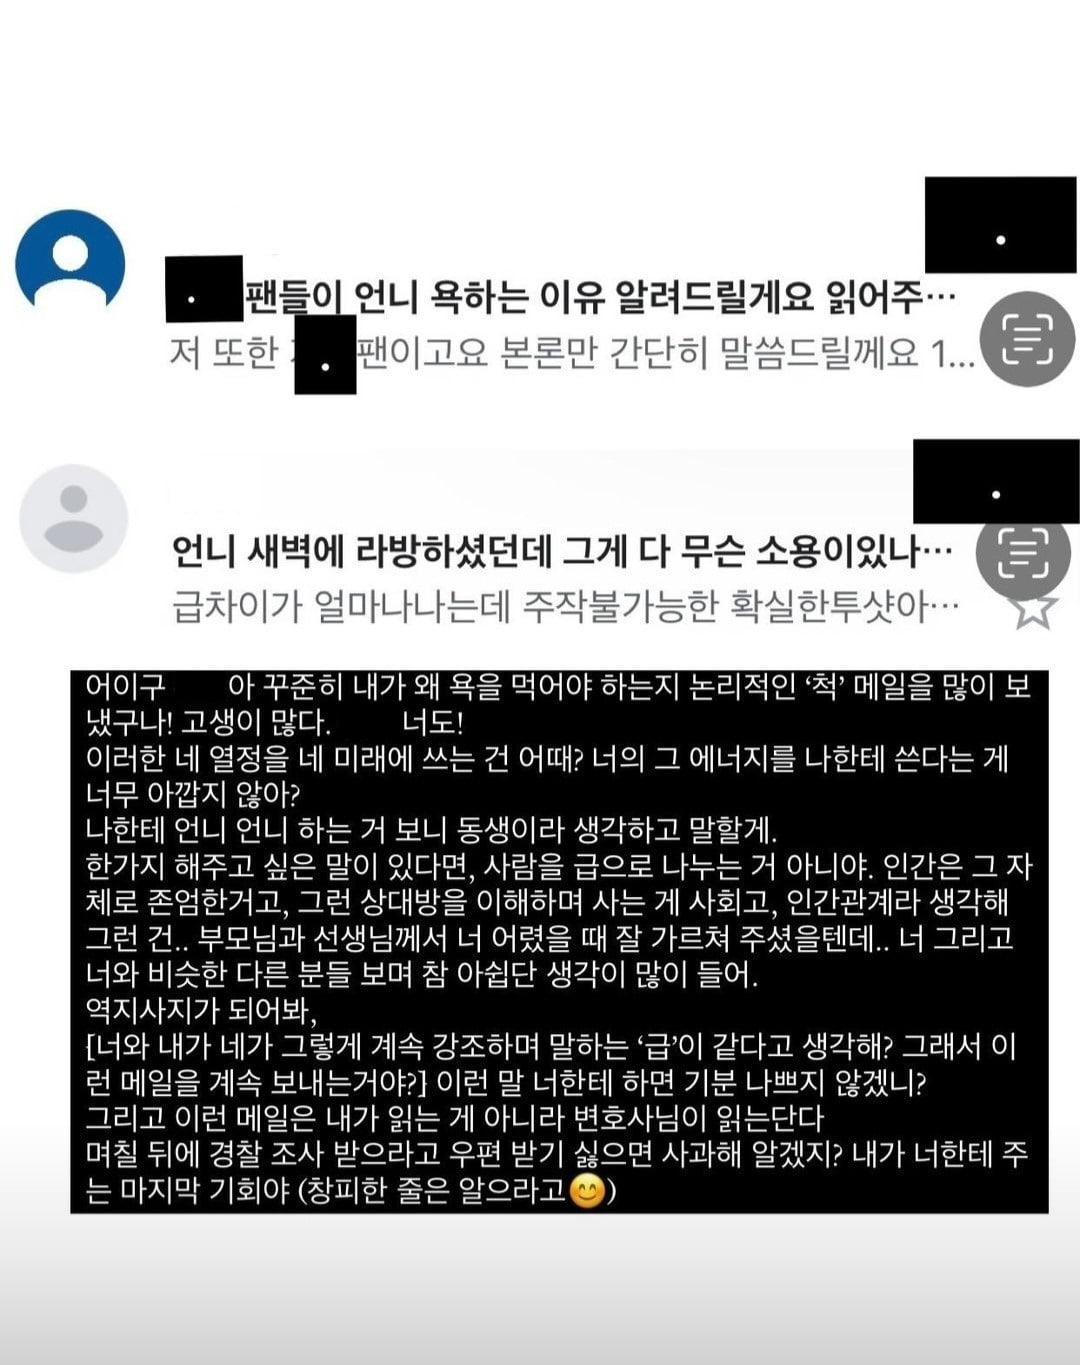 BTSジミン熱愛説ソングダウン、悪意のあるコメント